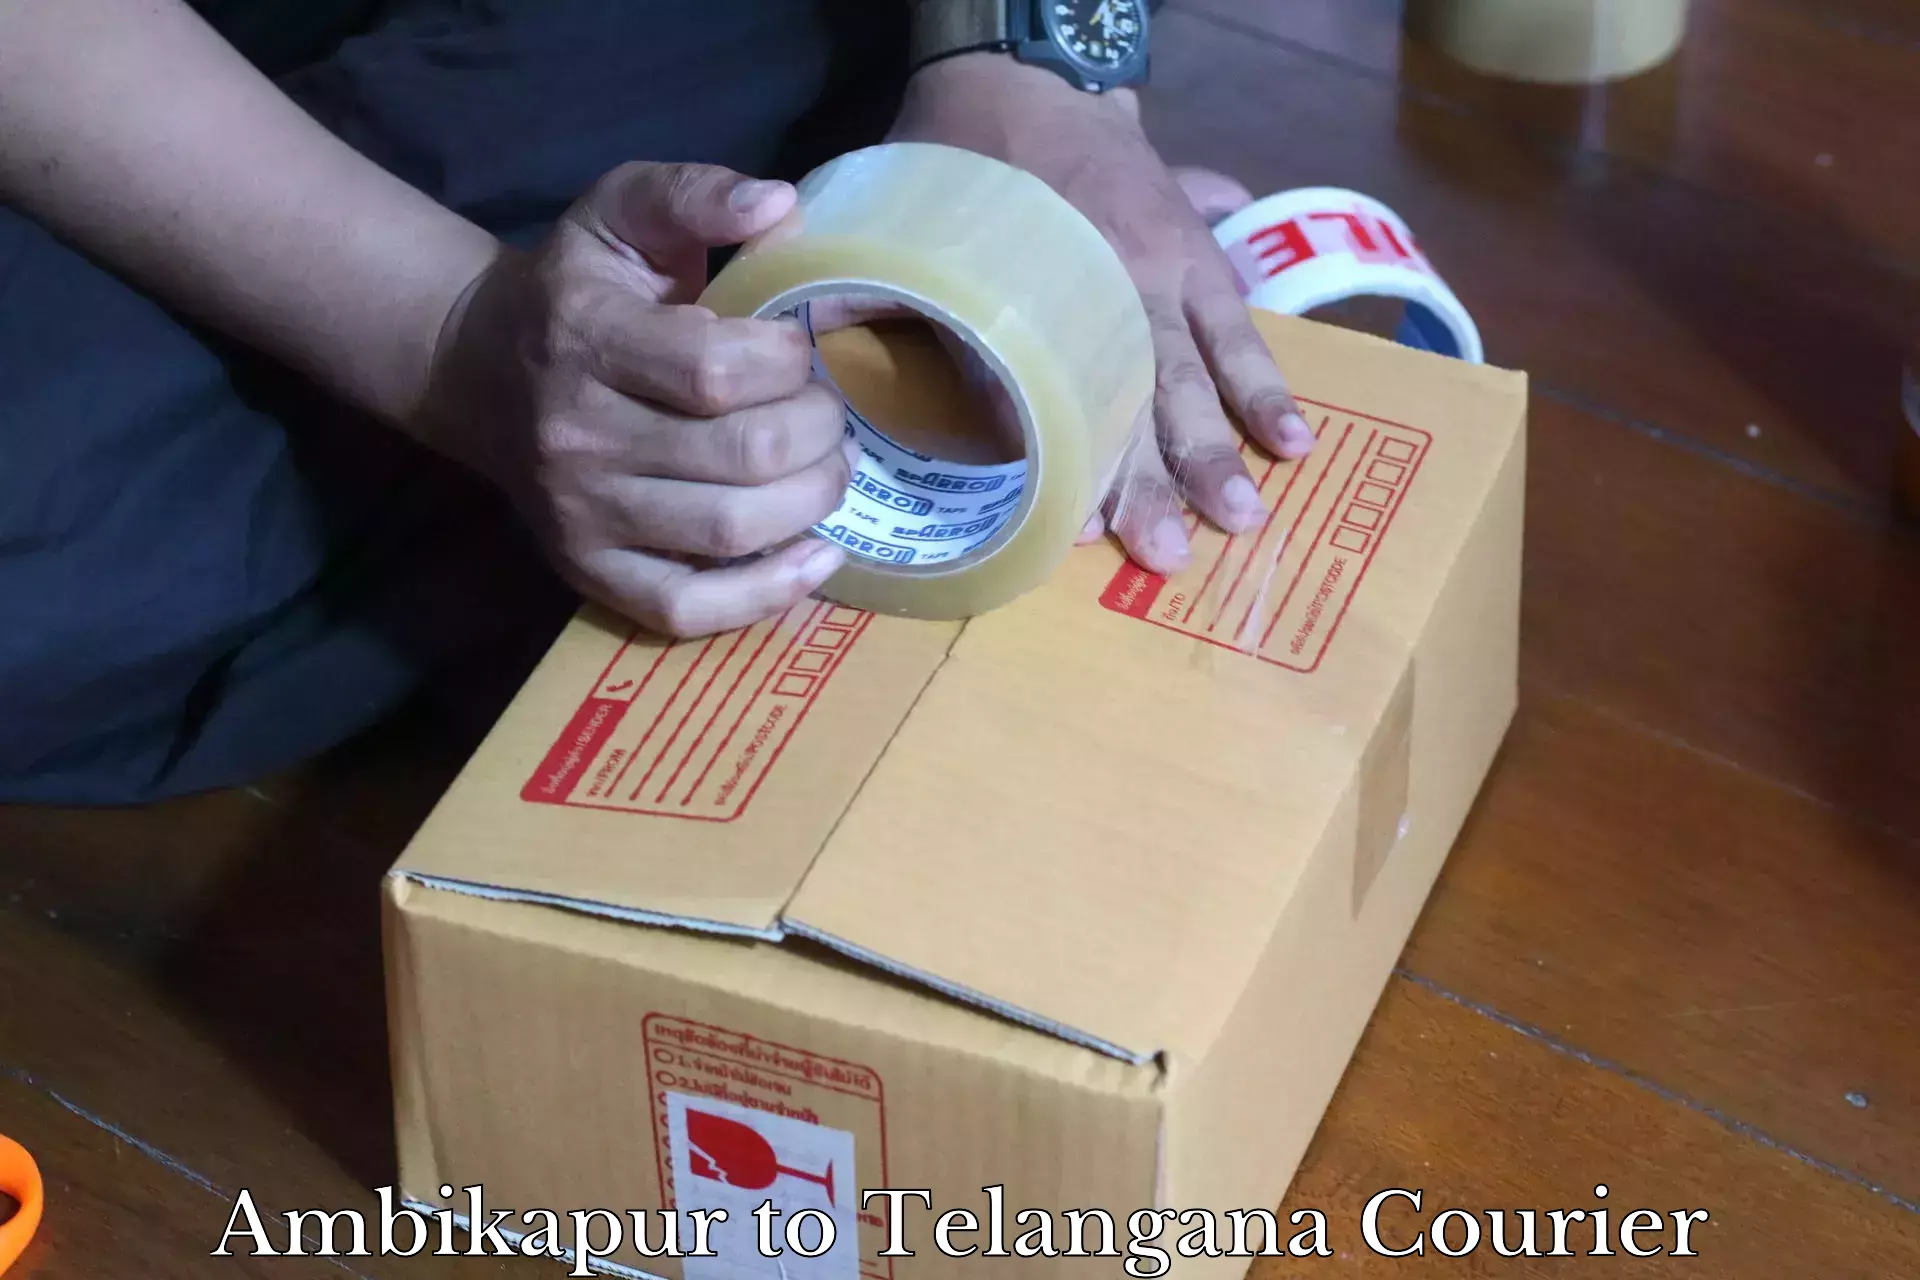 Doorstep delivery service Ambikapur to Telangana